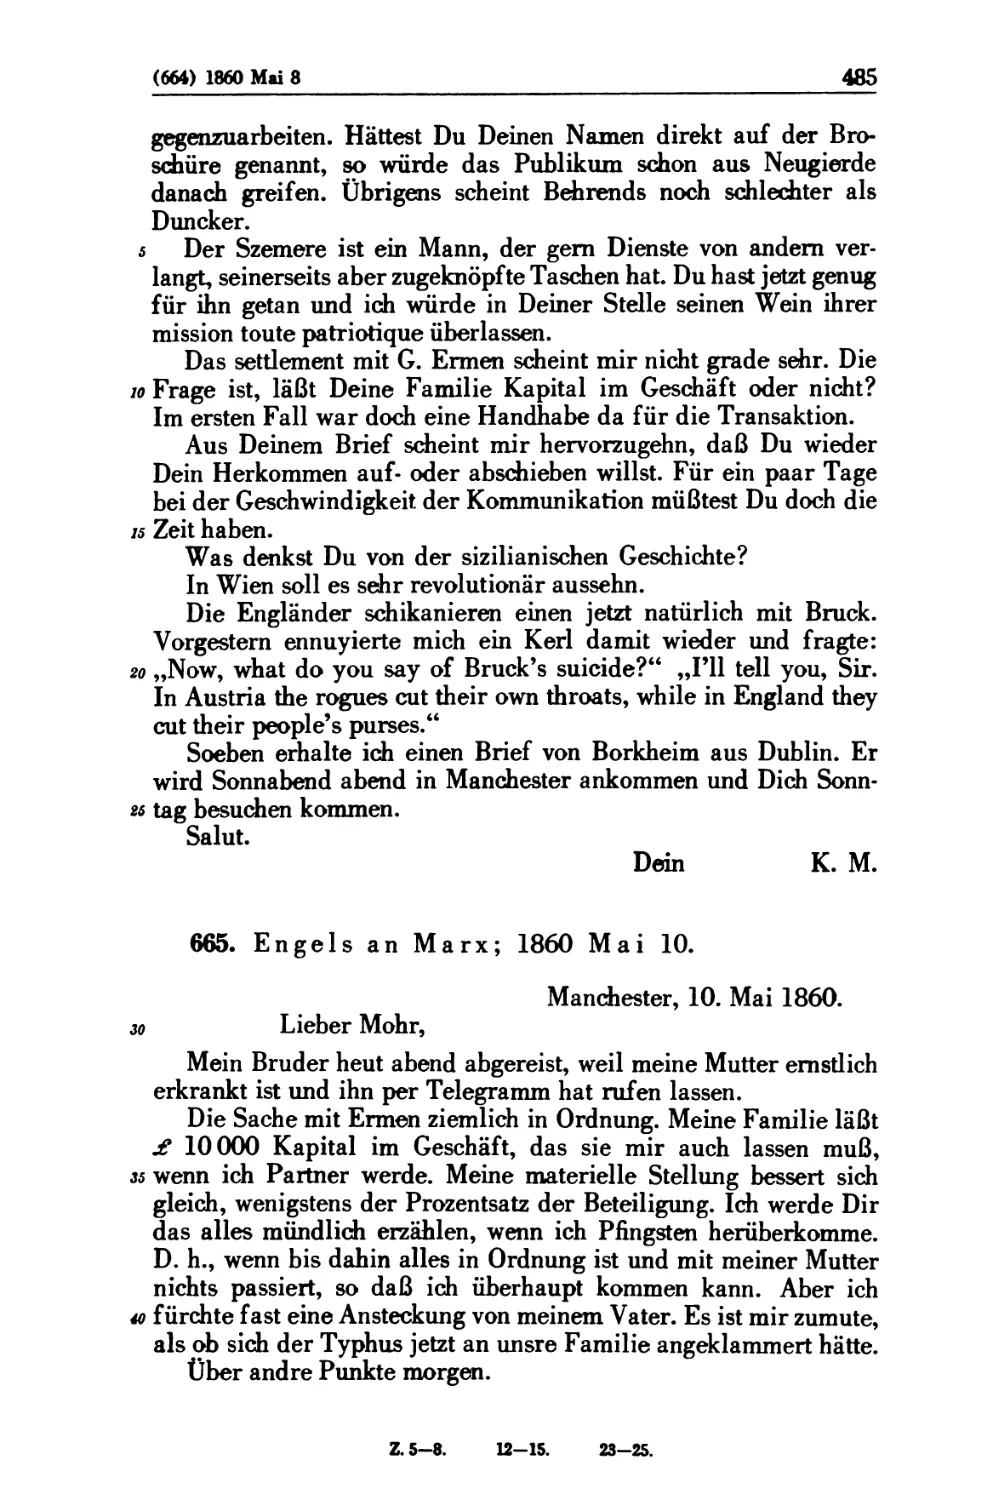 665. Engels an Marx; 1860 Mai 10